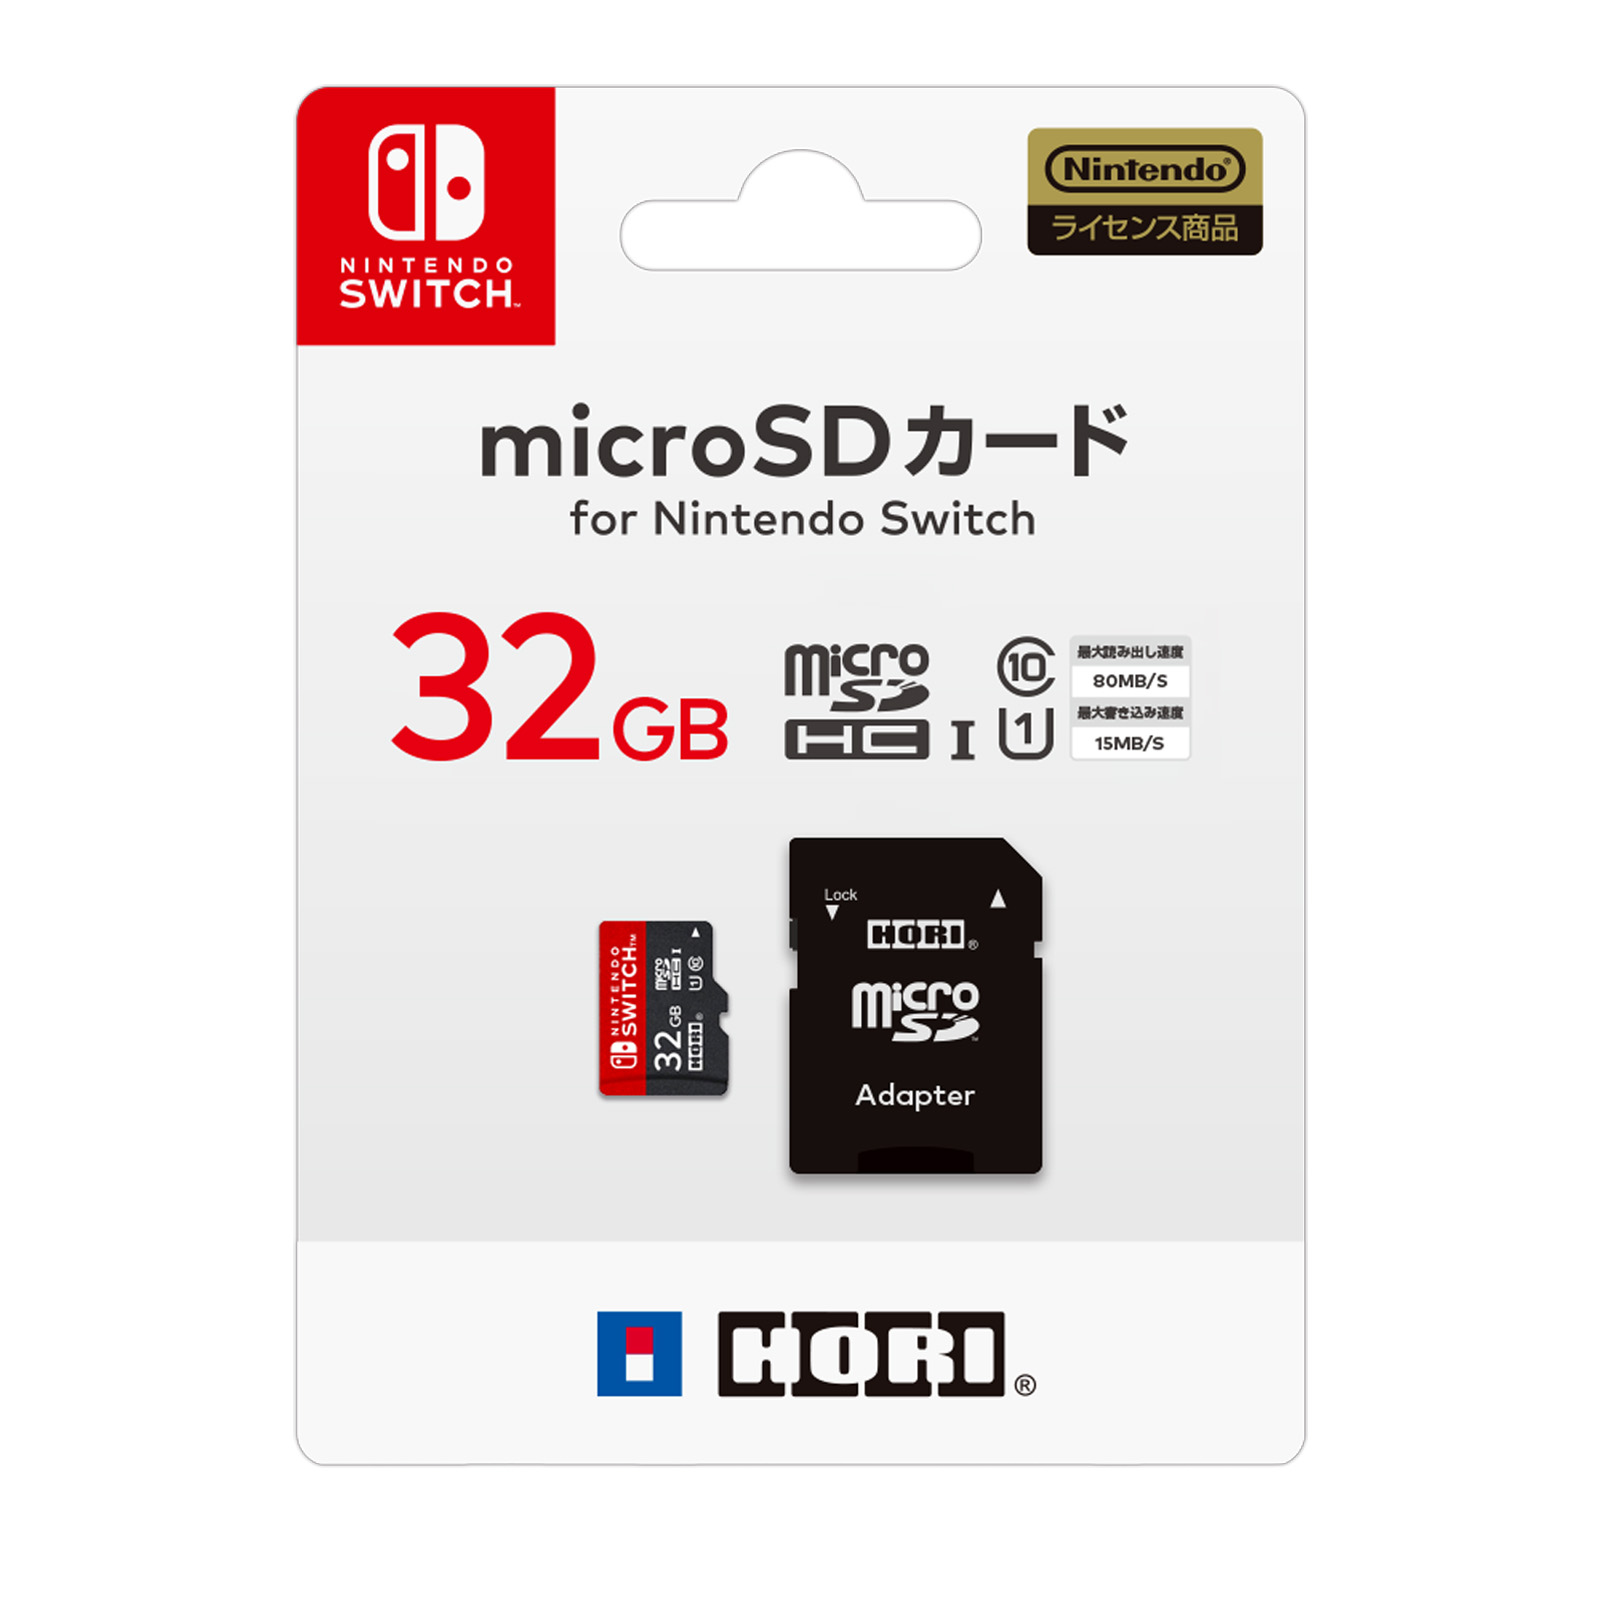  microSDカード for Nintendo Switch 32GB